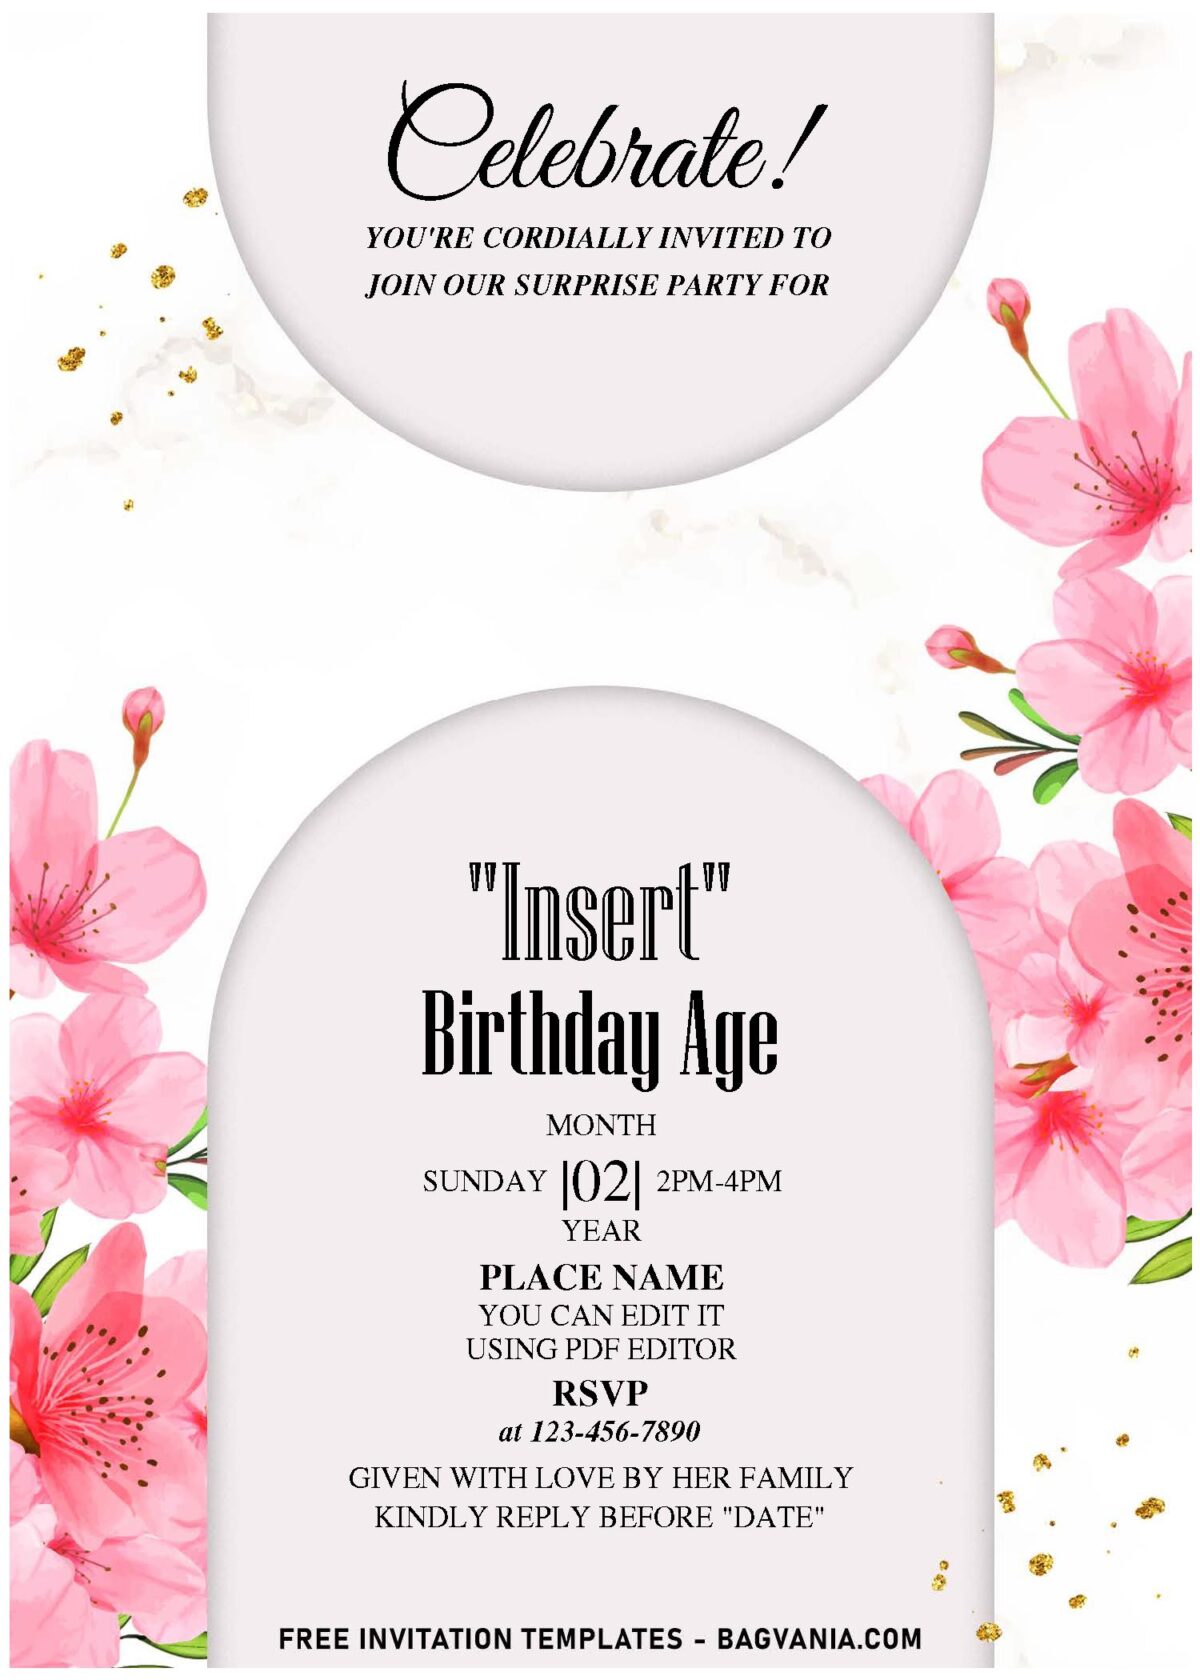 (Free Editable PDF) Picturesque Pink Japanese Sakura Birthday Invitation Templates with elegant script